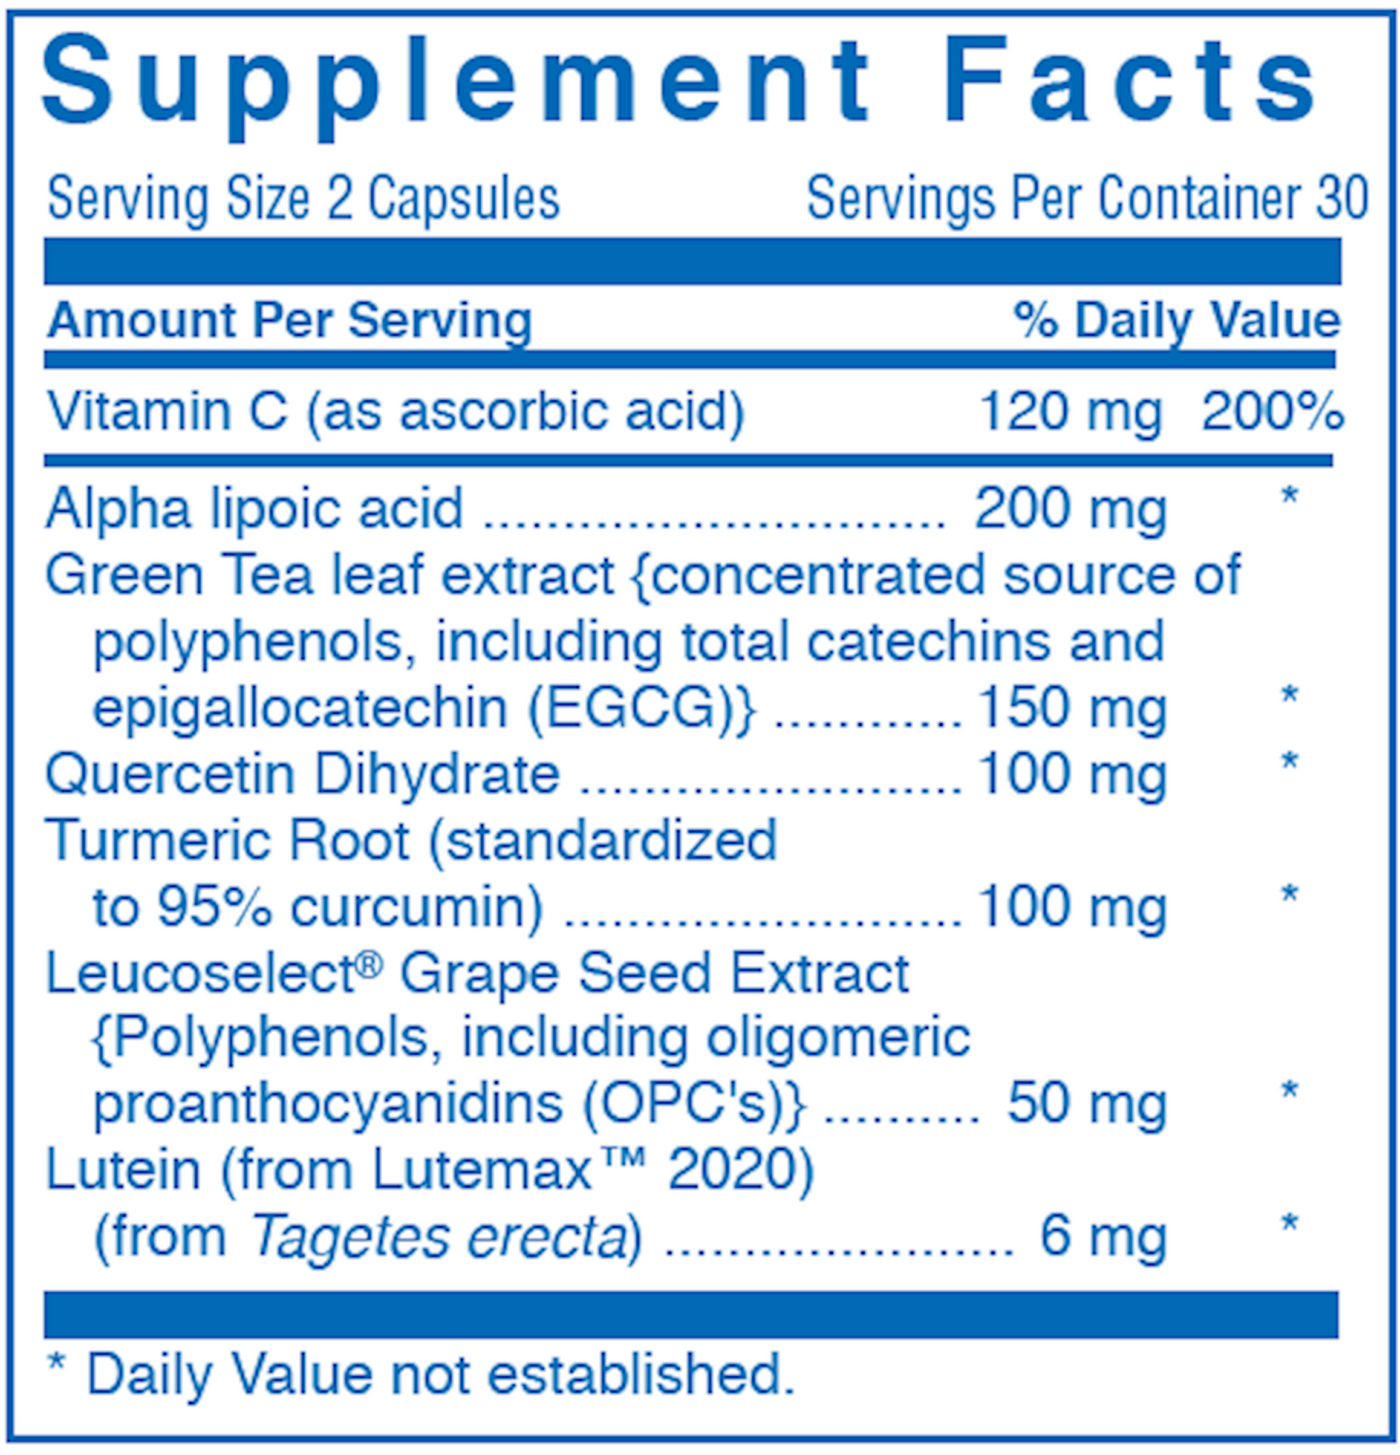 Clinical Antioxidant Complex 60 veg caps Curated Wellness